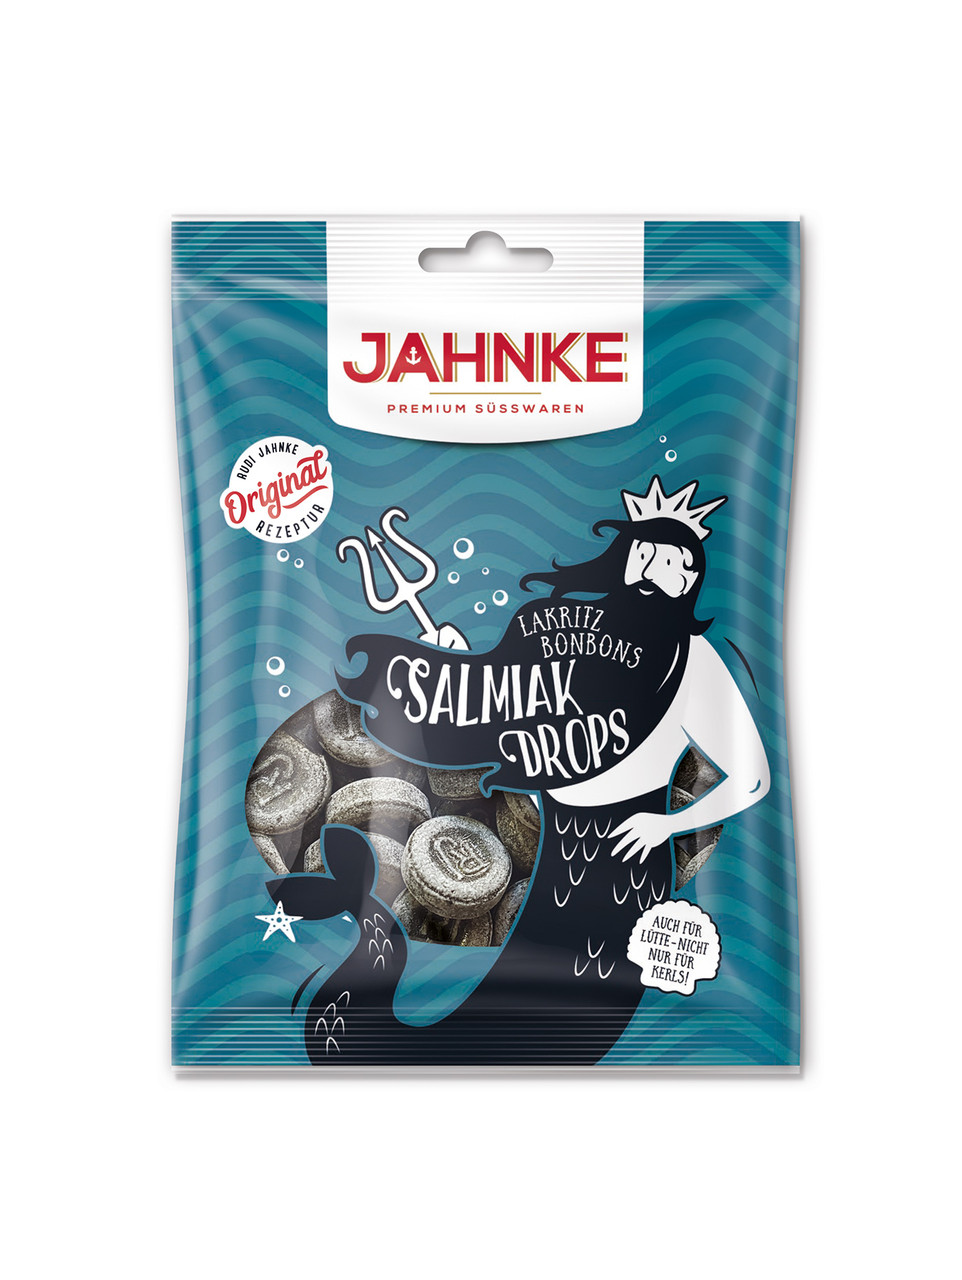 Jahnke Salmiak Drops 150g - 5.2oz - myGermanCandy.Com